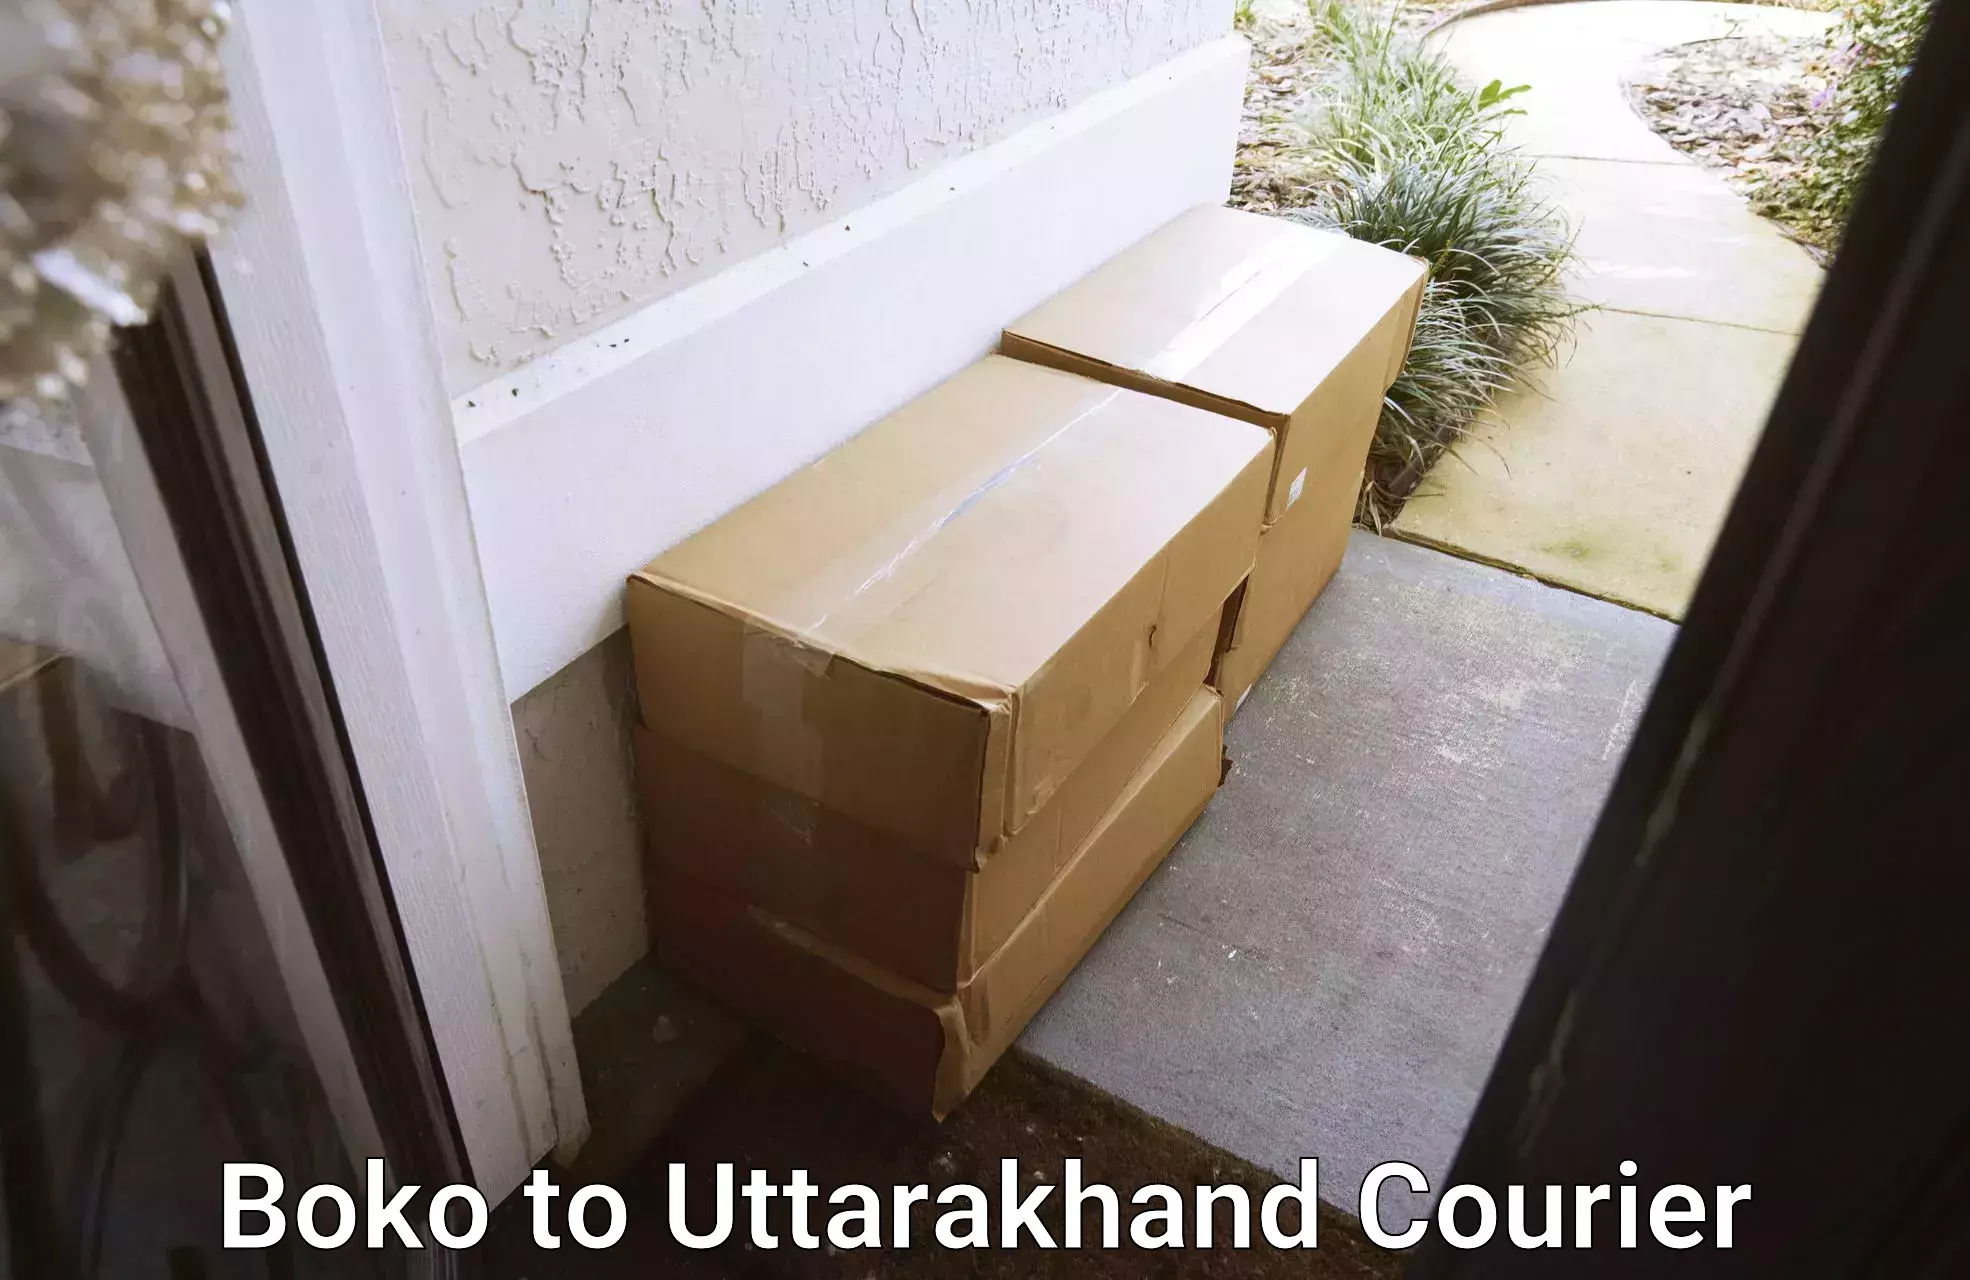 Efficient cargo handling Boko to Uttarakhand